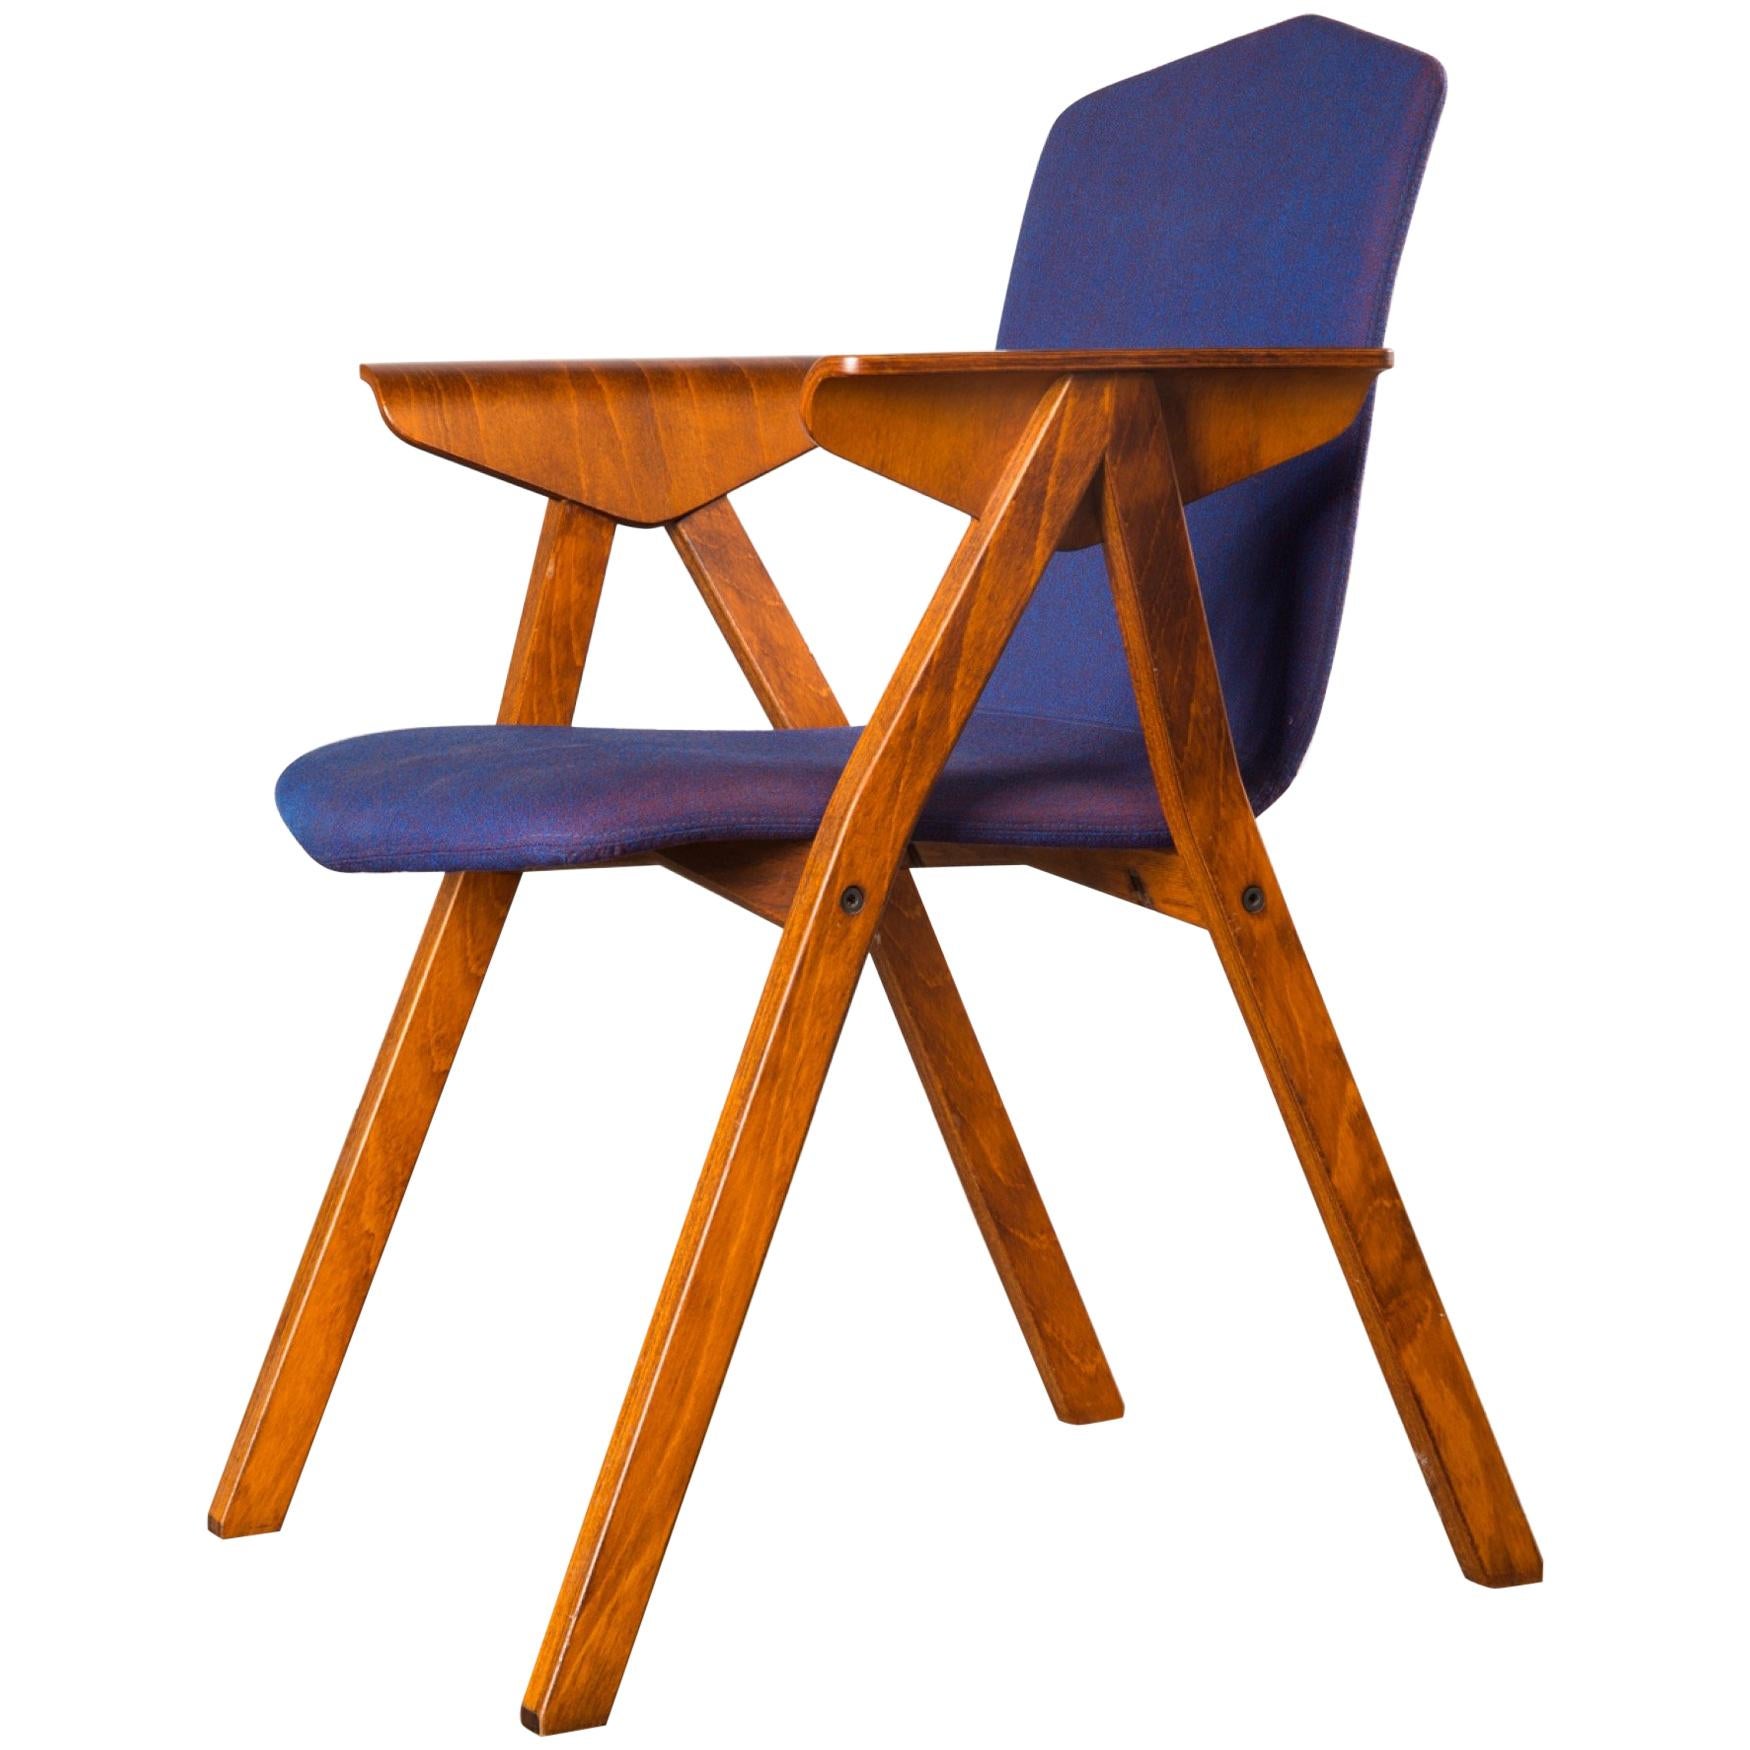 Mid-Century-Sessel aus Rosenholz des norwegischen Herstellers Hag